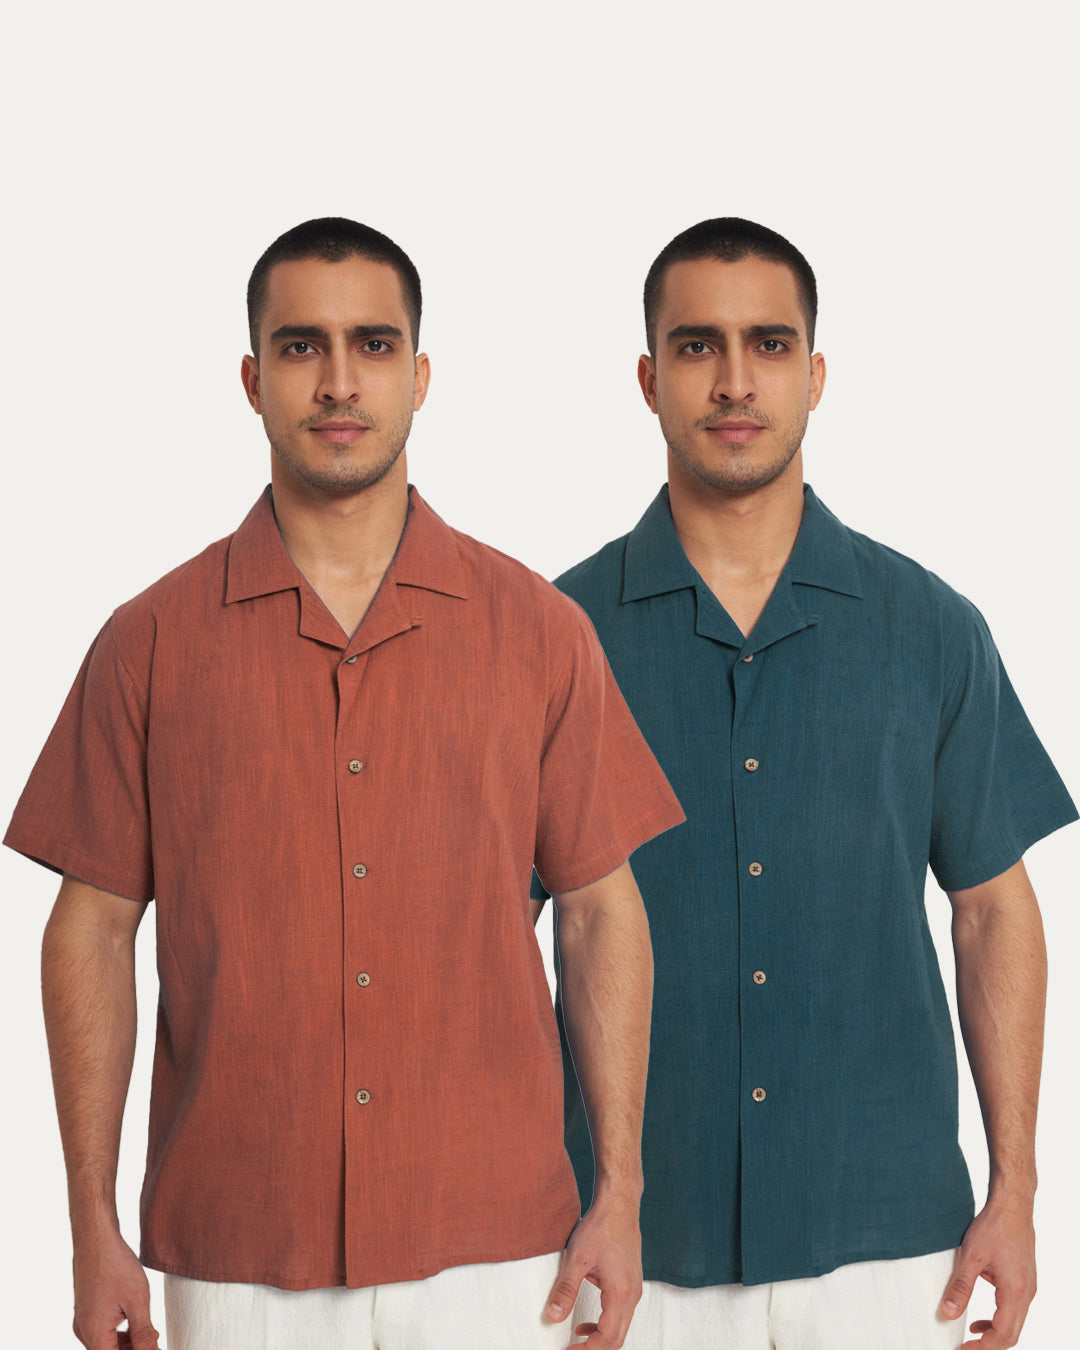 Combo : Classic Deep Teal & Blush Men's Half Sleeves Shirt